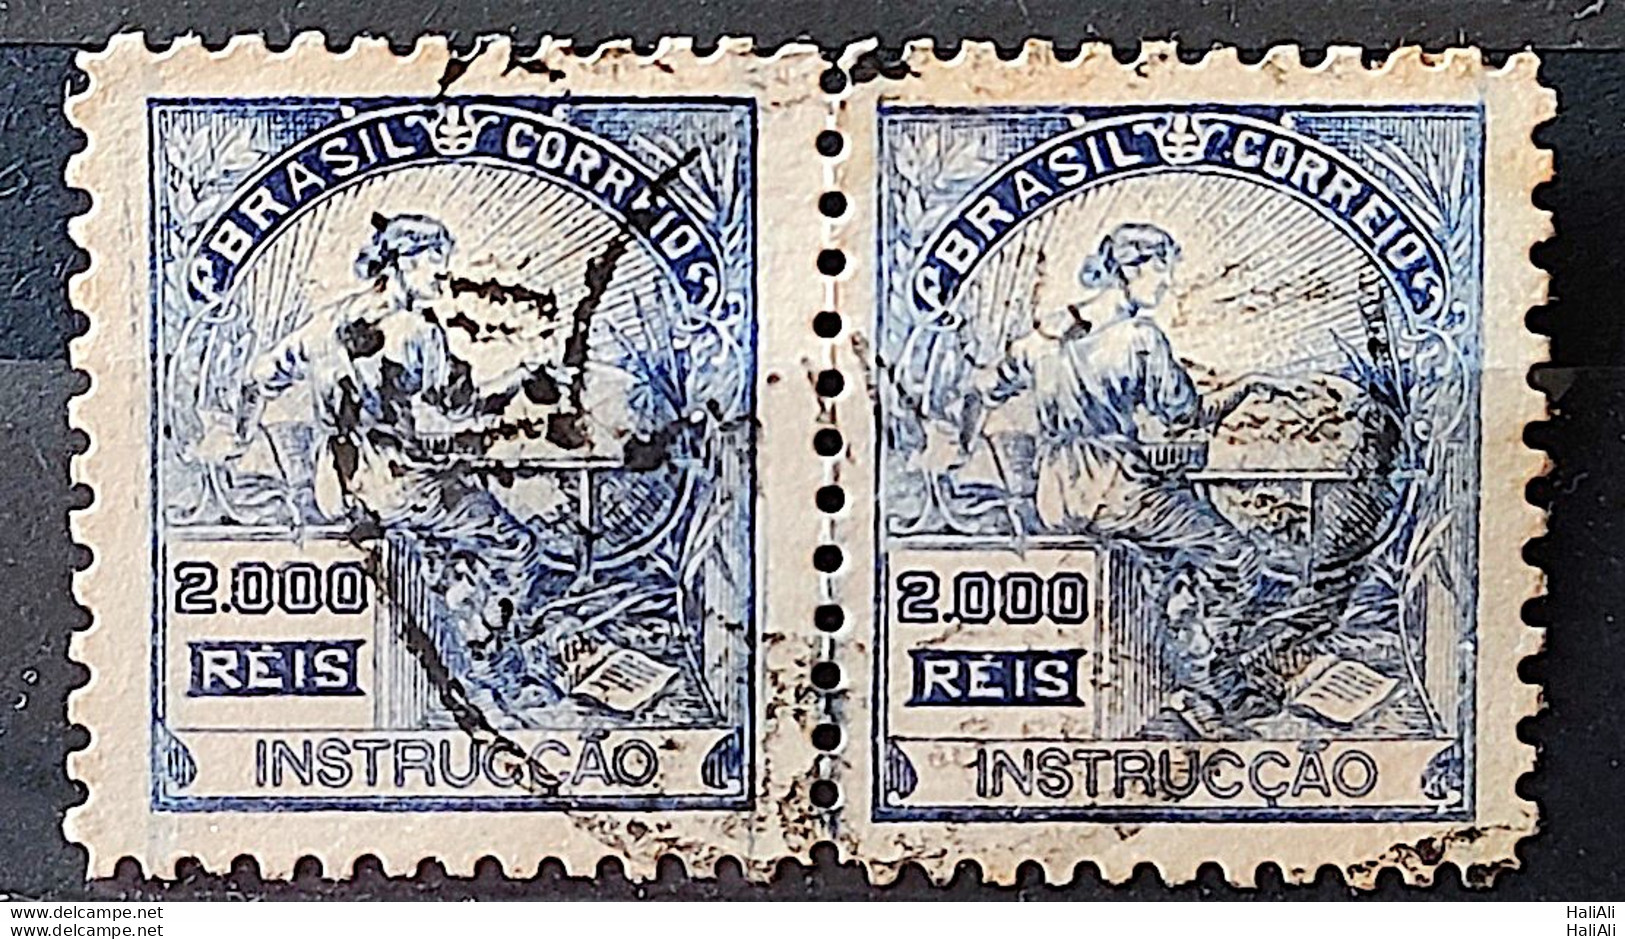 Brazil Regular Stamp Cod RHM 294 Grandpa Instruction 2000 Reis Filigree L 1934 Par Circulated - Used Stamps